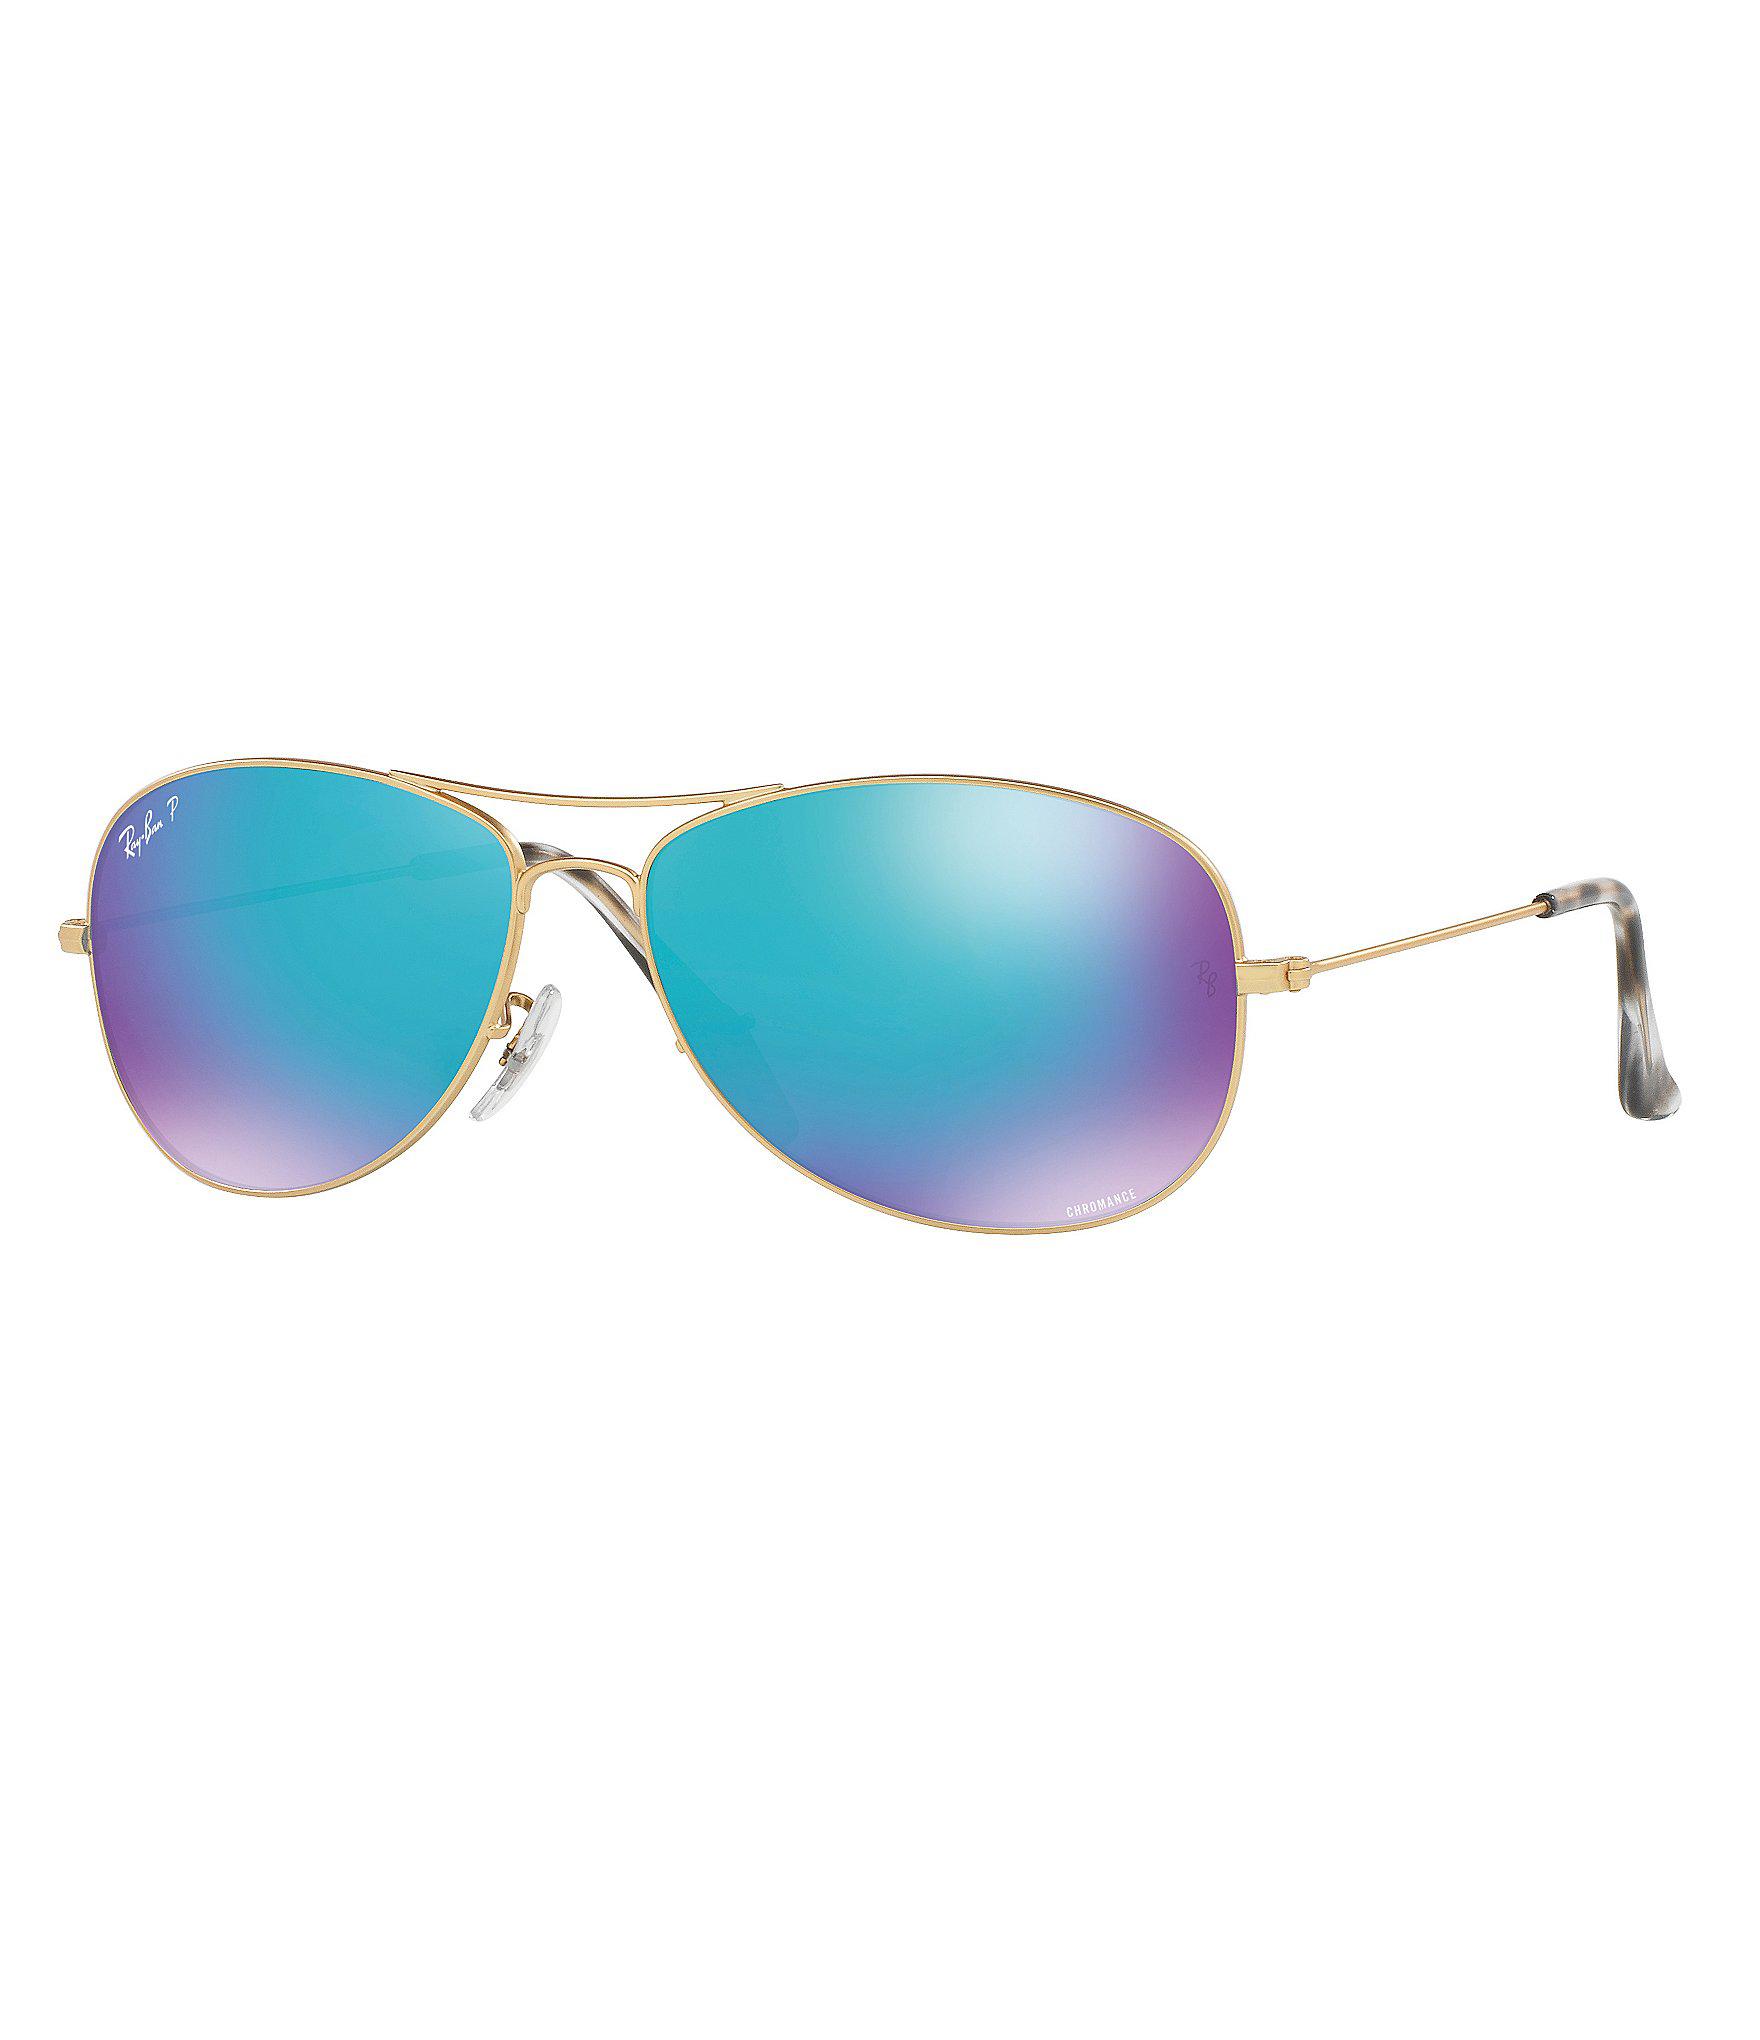 Lyst - Ray-Ban Chromance Polarized Mirrored Aviator Sunglasses in Blue ...